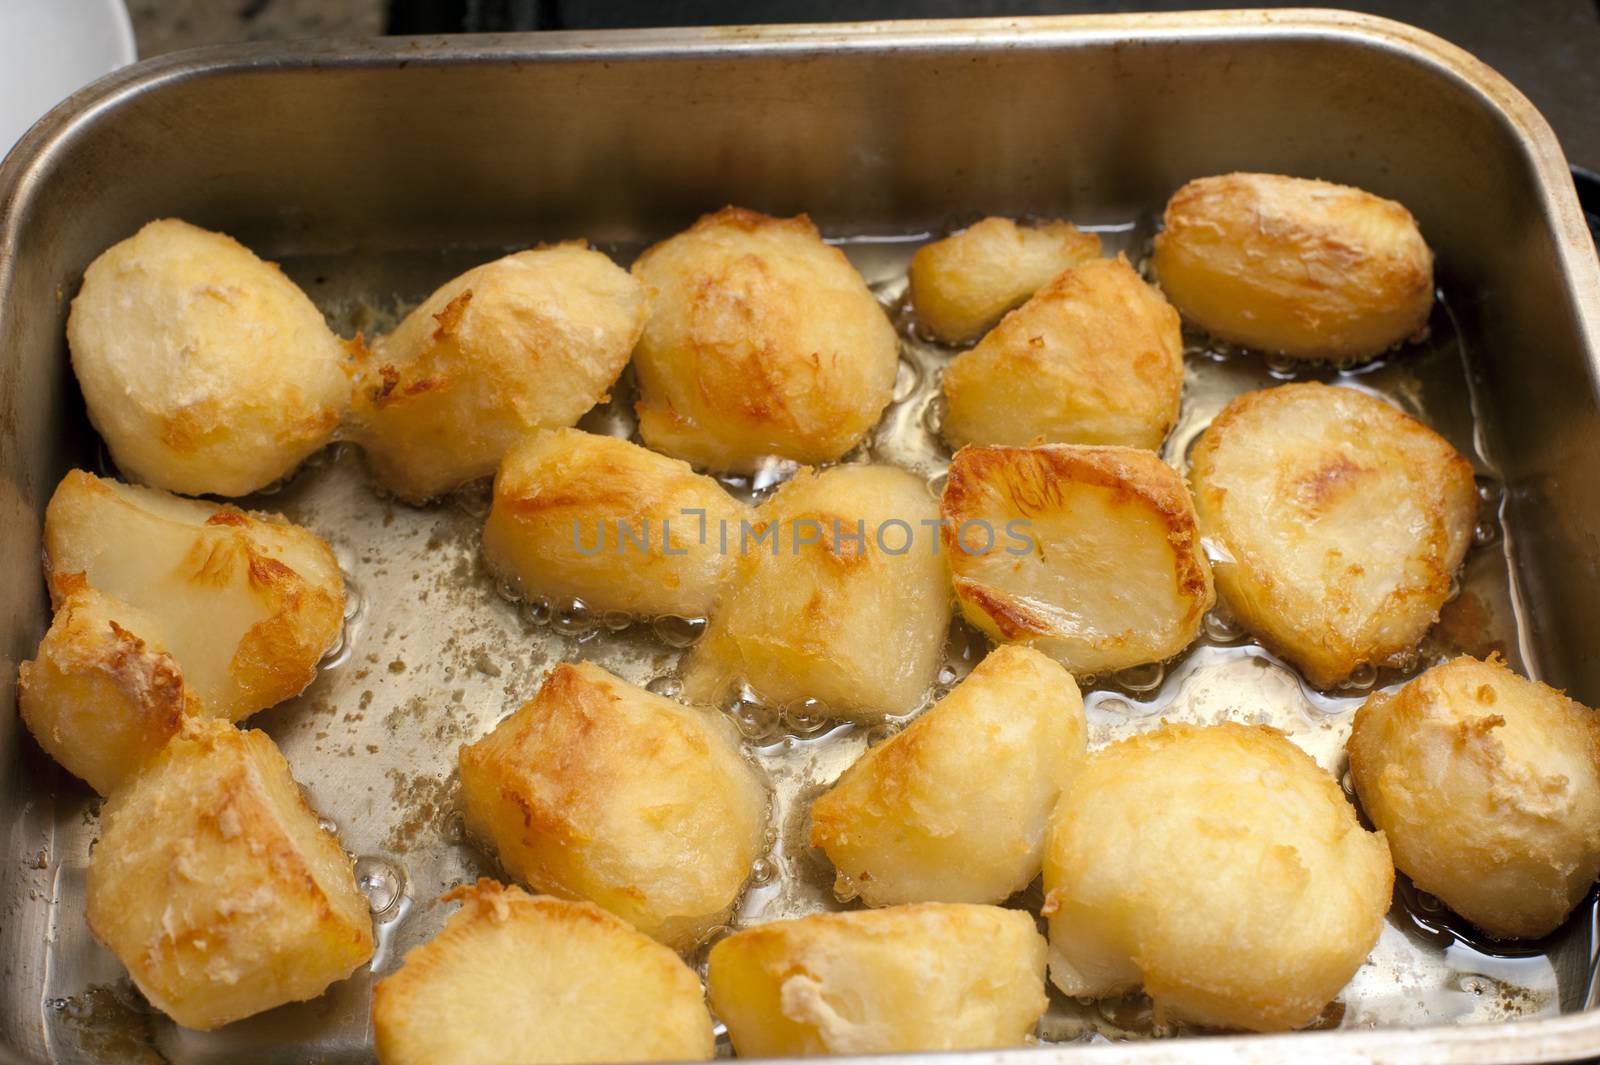 Delicious golden crispy roast potatoes by stockarch